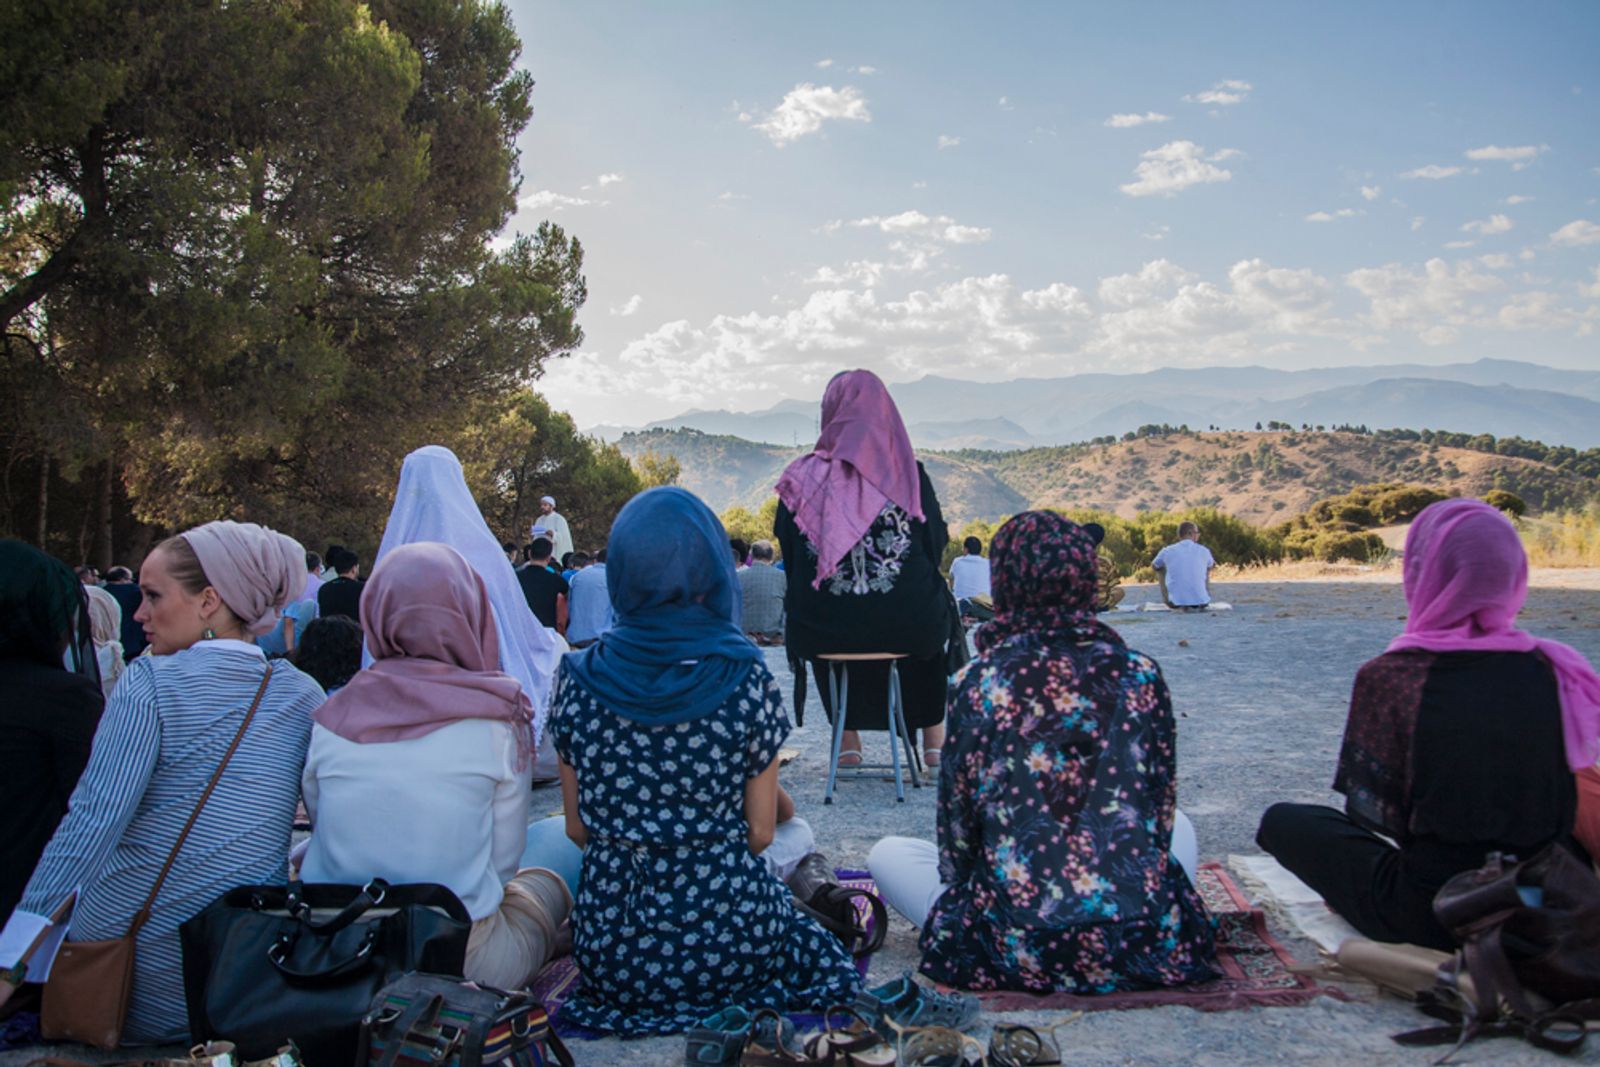 © Chiara Ferronato - Women and men pray outdoors in separate groups to celebrate the end of Ramadan.